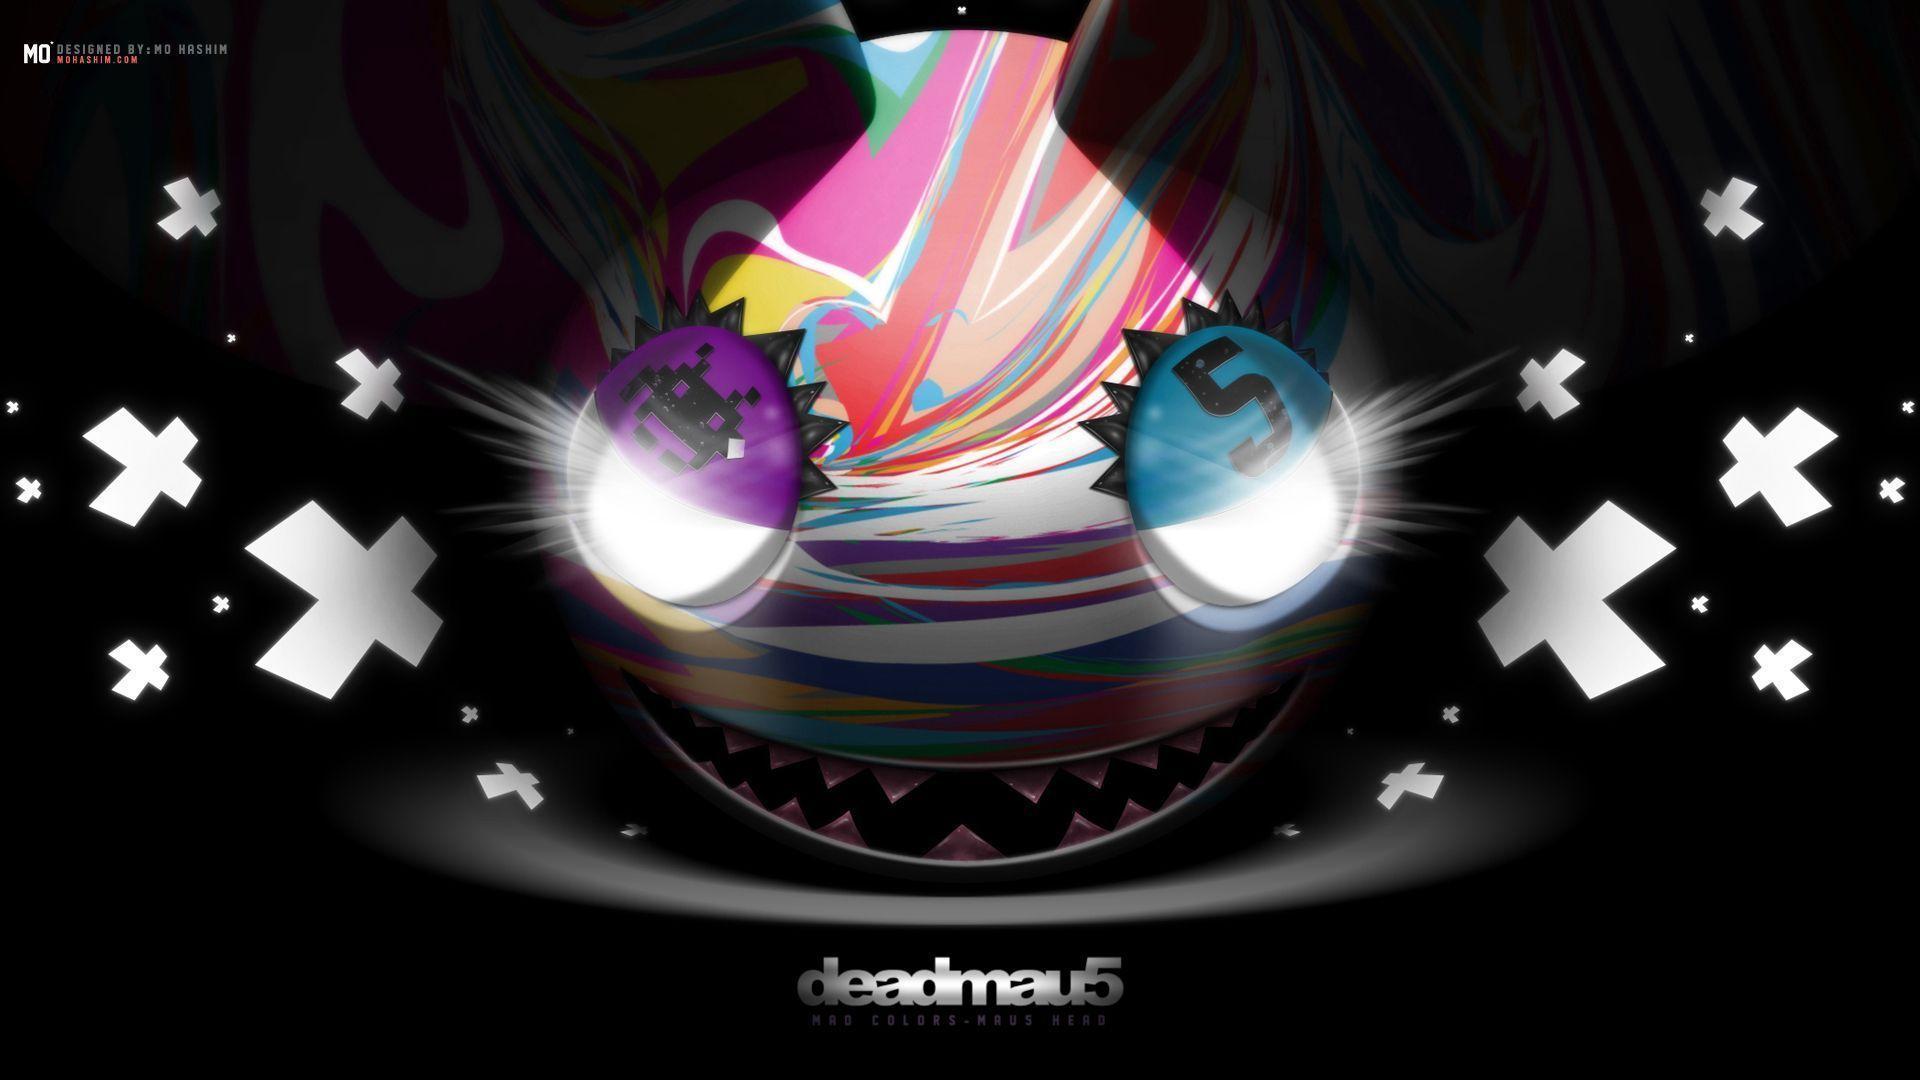 Deadmau5 Wallpaper